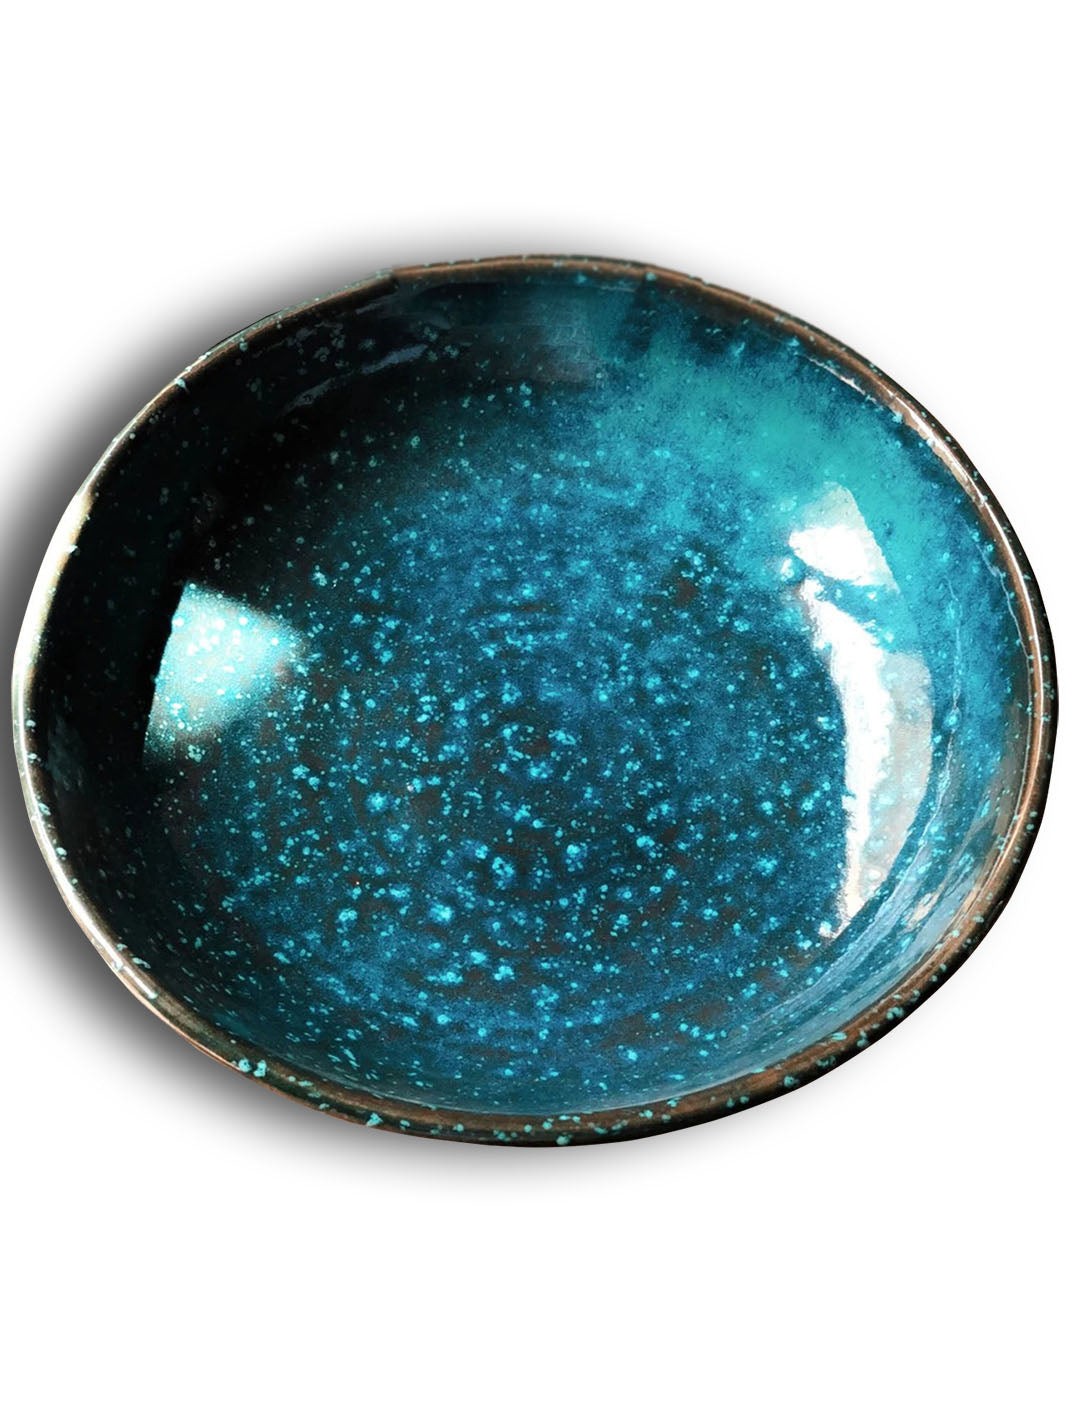 Artistic Handcrafted Ceramic Esmeralda Pasta Bowl Deco Bowls DCB0011